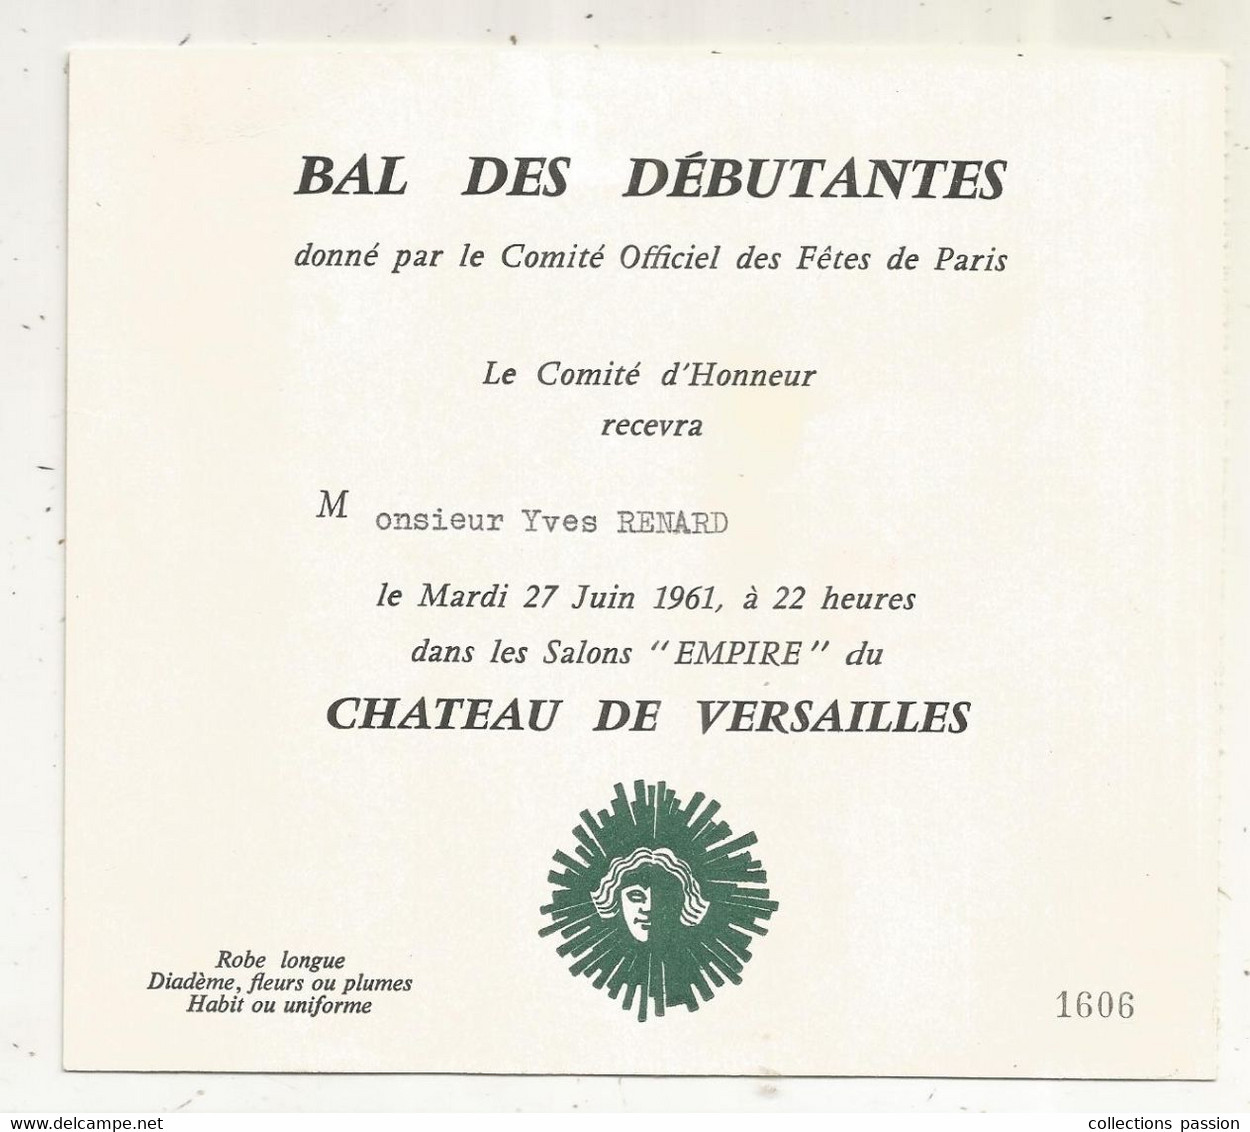 programme (velin d'Arches),BAL DES DEBUTANTES,Palais de VERSAILLES, 1961, invitation, carnet de bal, frais fr R3: 20 e